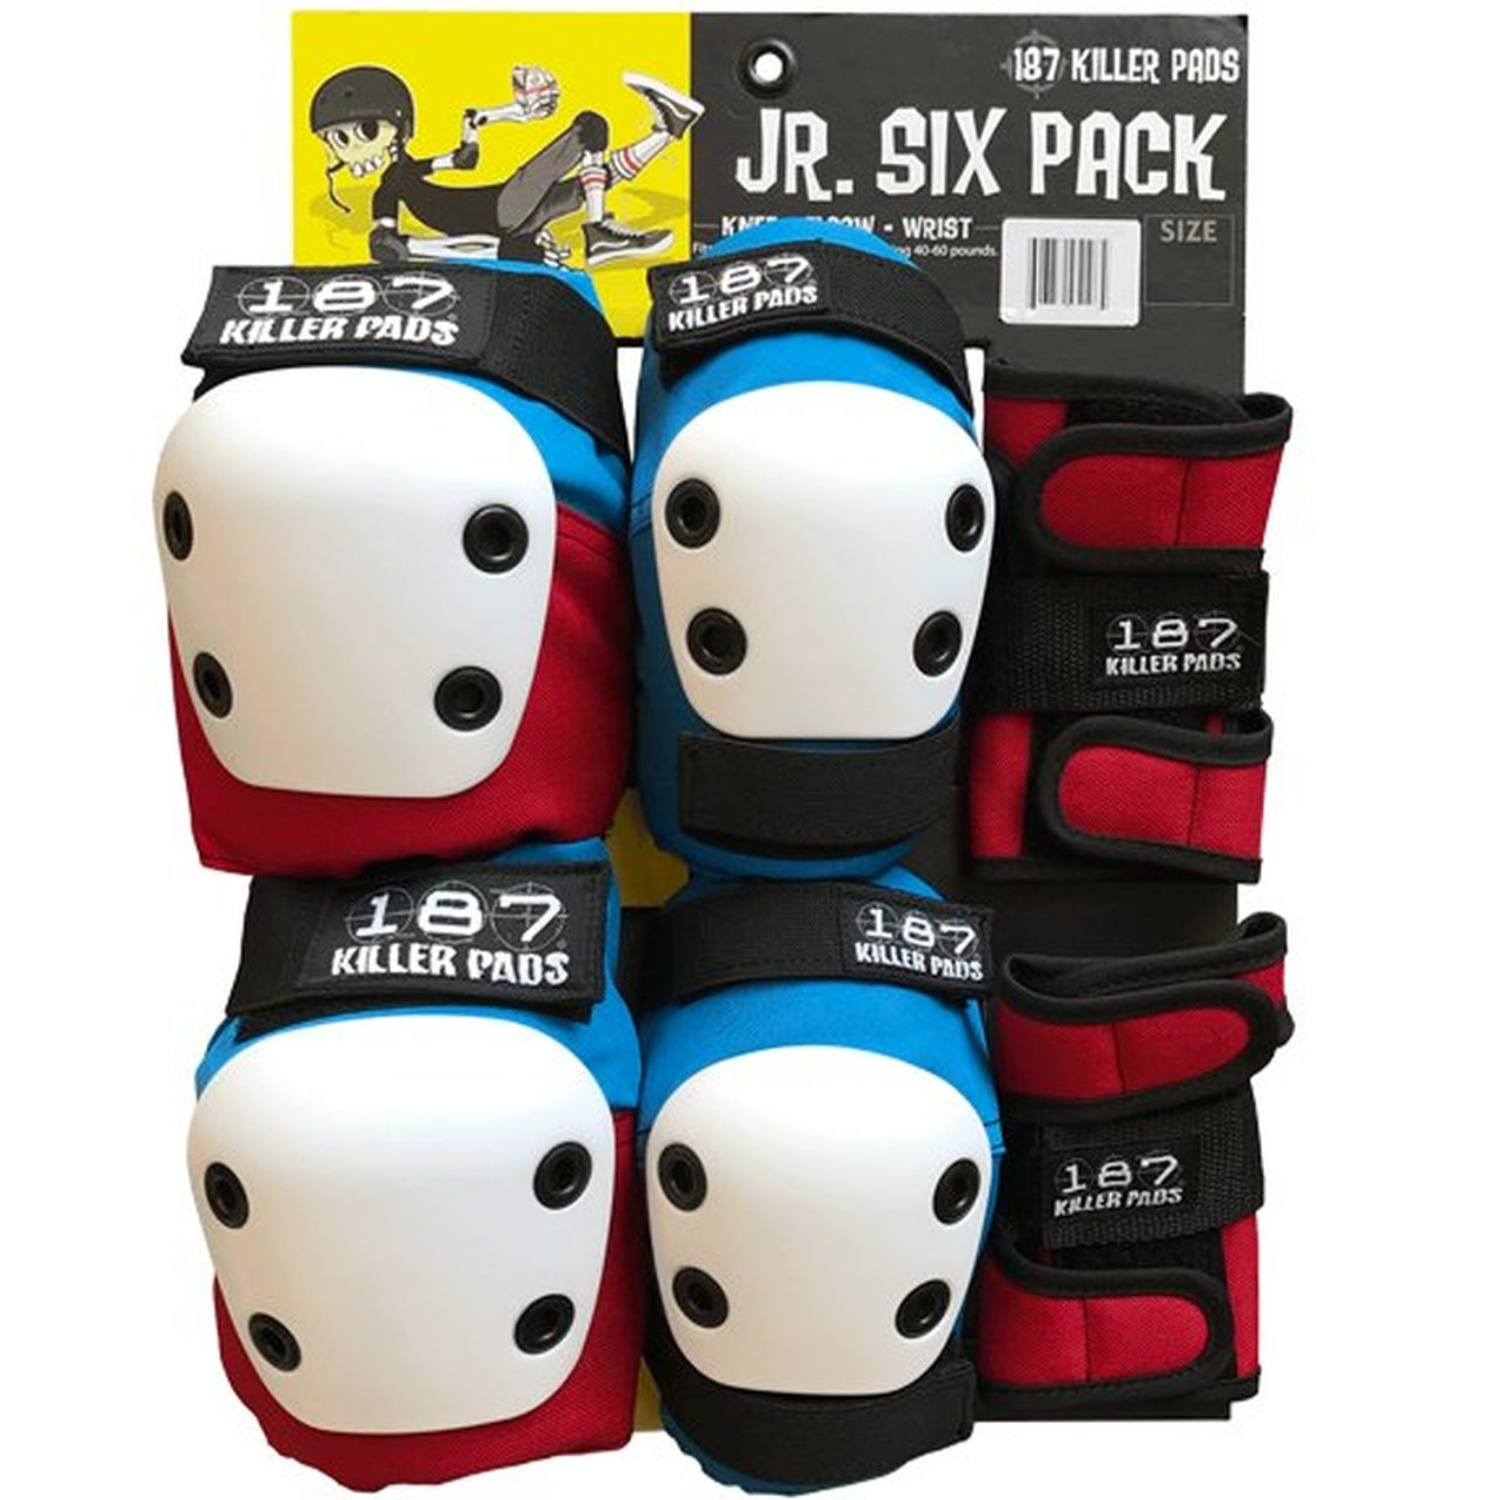 Proteccion Junior Six Pack 187 Killer Pads